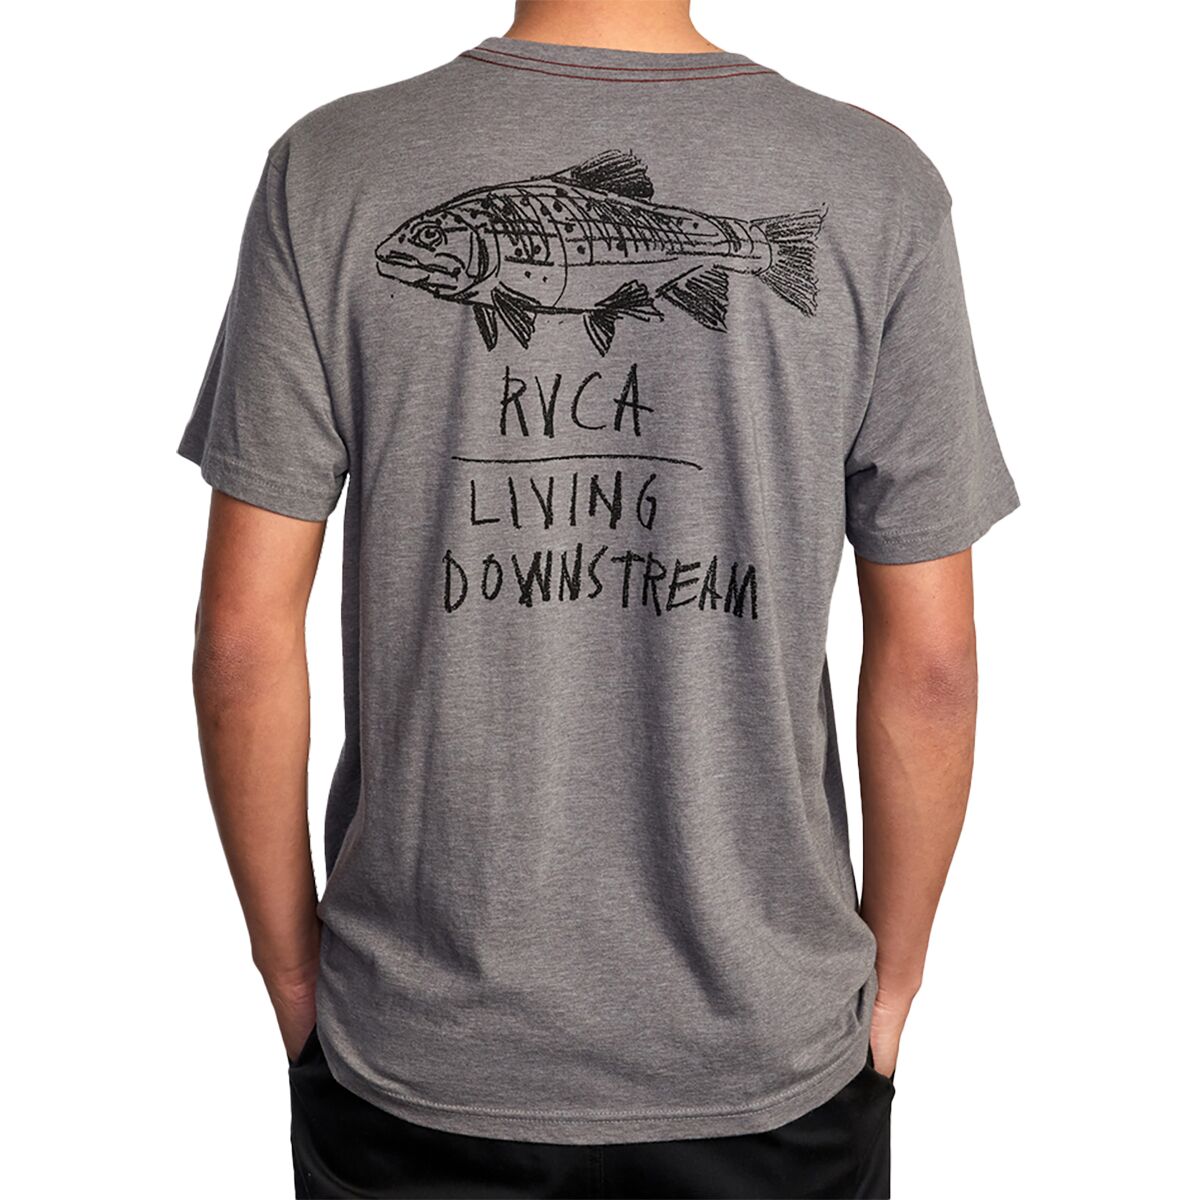 RVCA Downstream Short-Sleeve T-Shirt - Men's